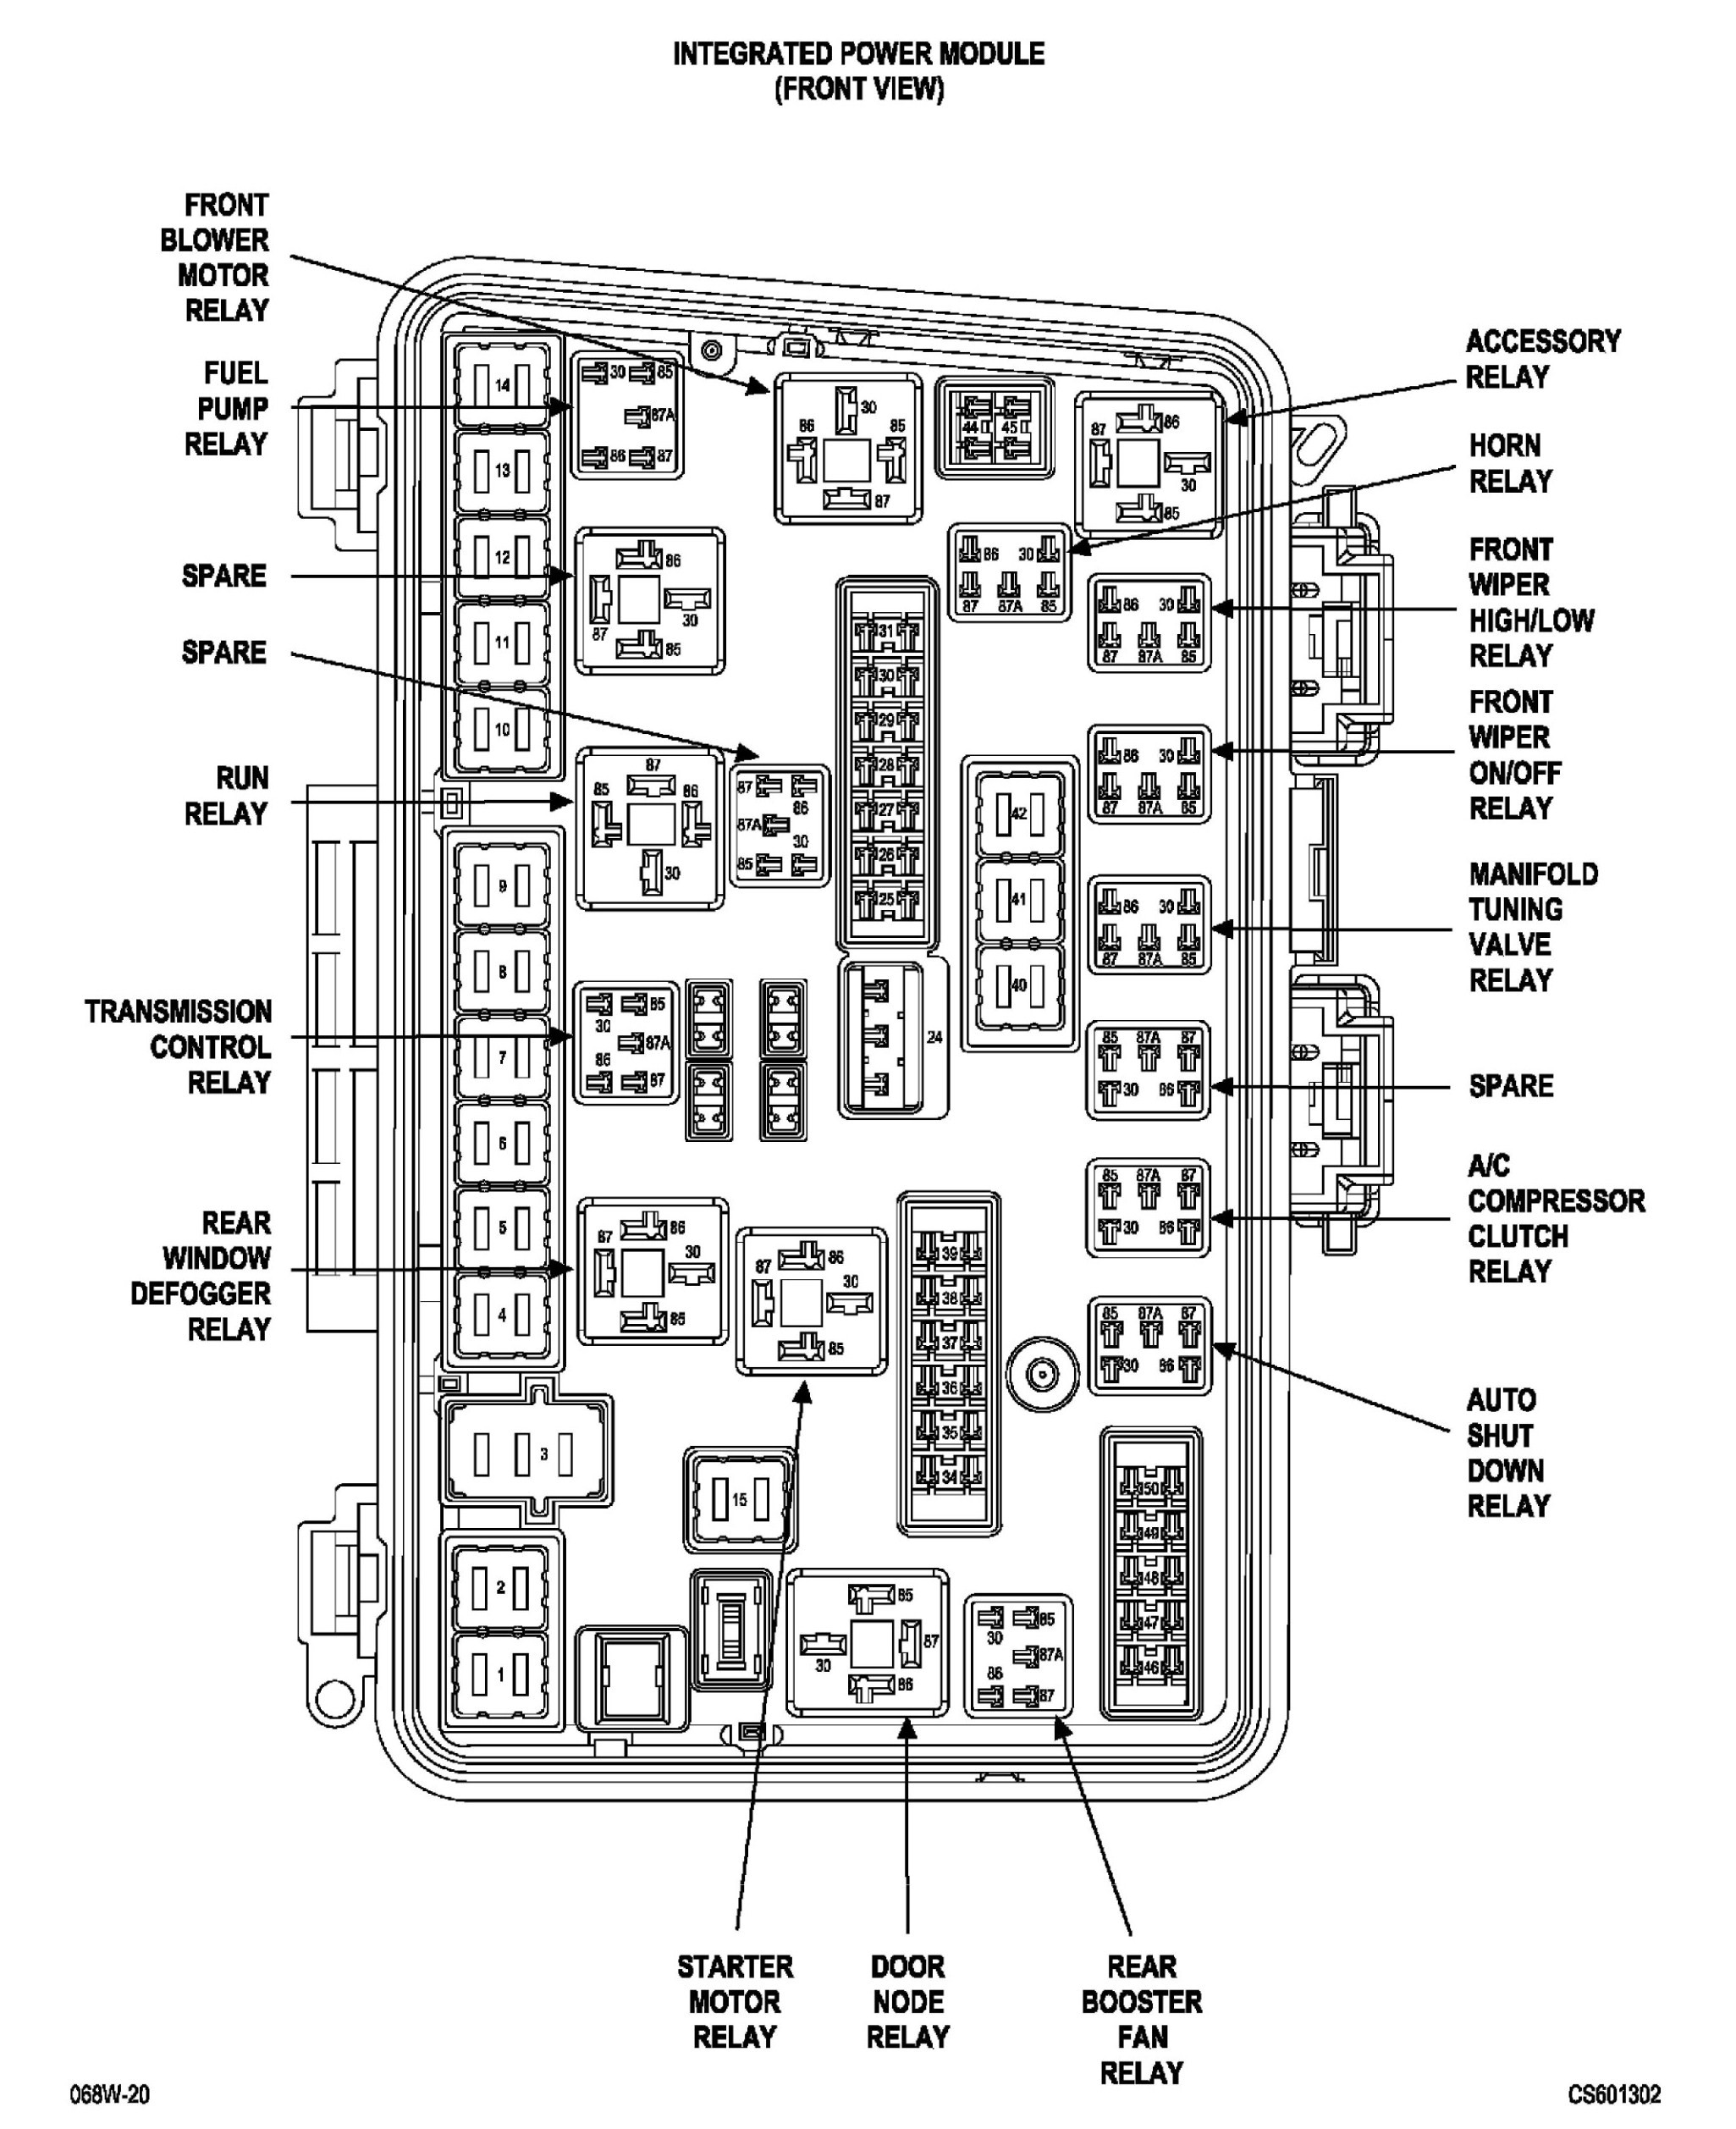 2007 Chrysler Pt Cruiser Fuse Box Diagram - camizu.org 2007 chrysler pt cruiser wiring diagrams 